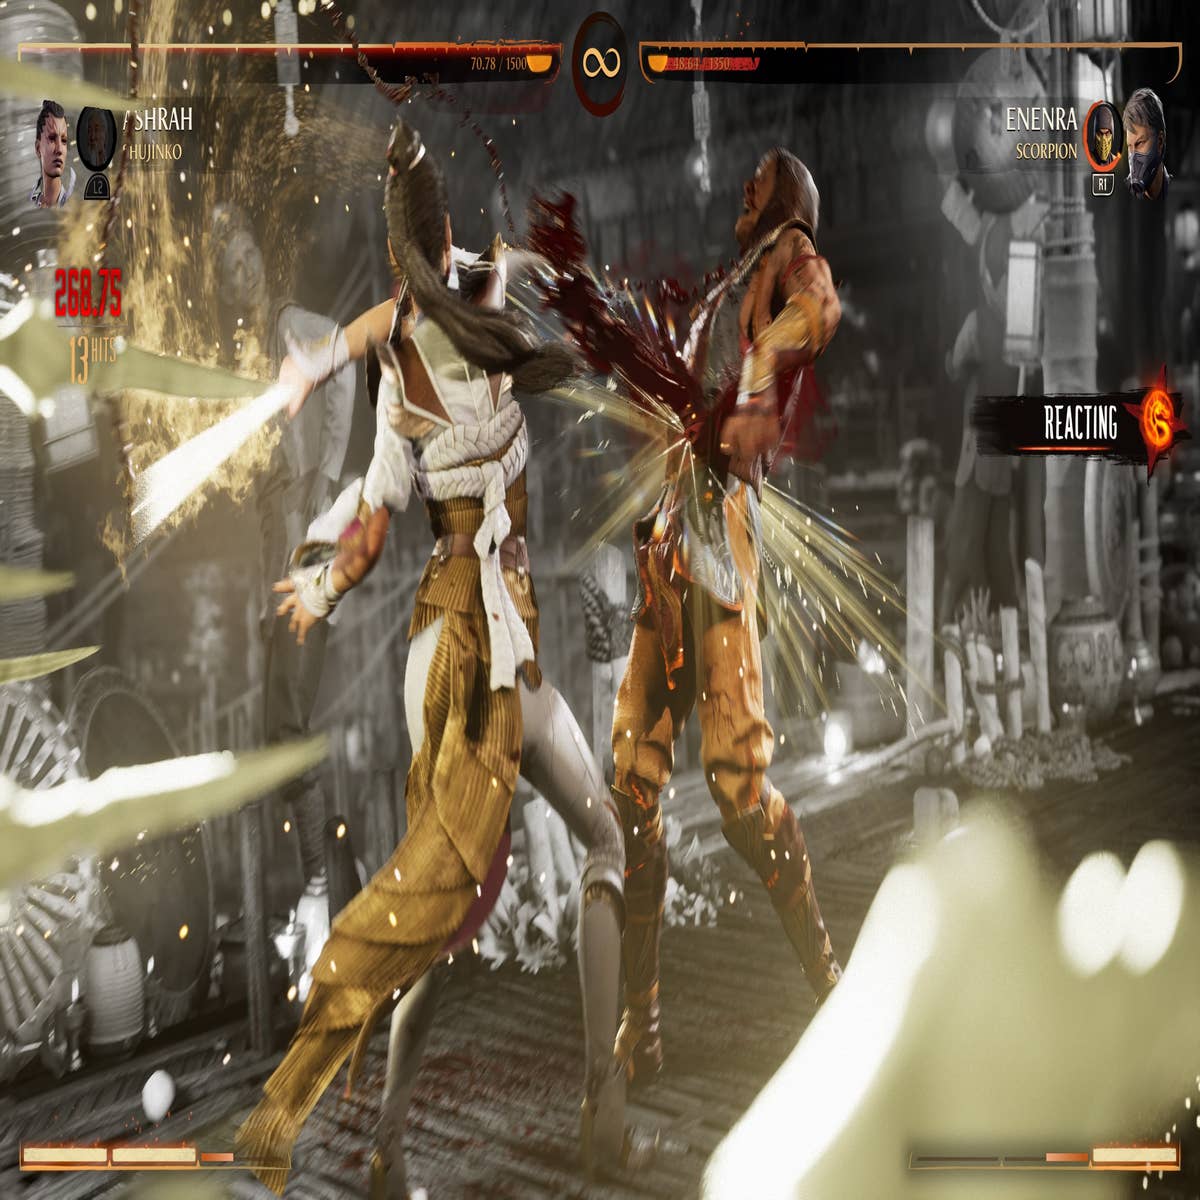 Mortal Kombat 1 launch trailer shows off Reiko gameplay